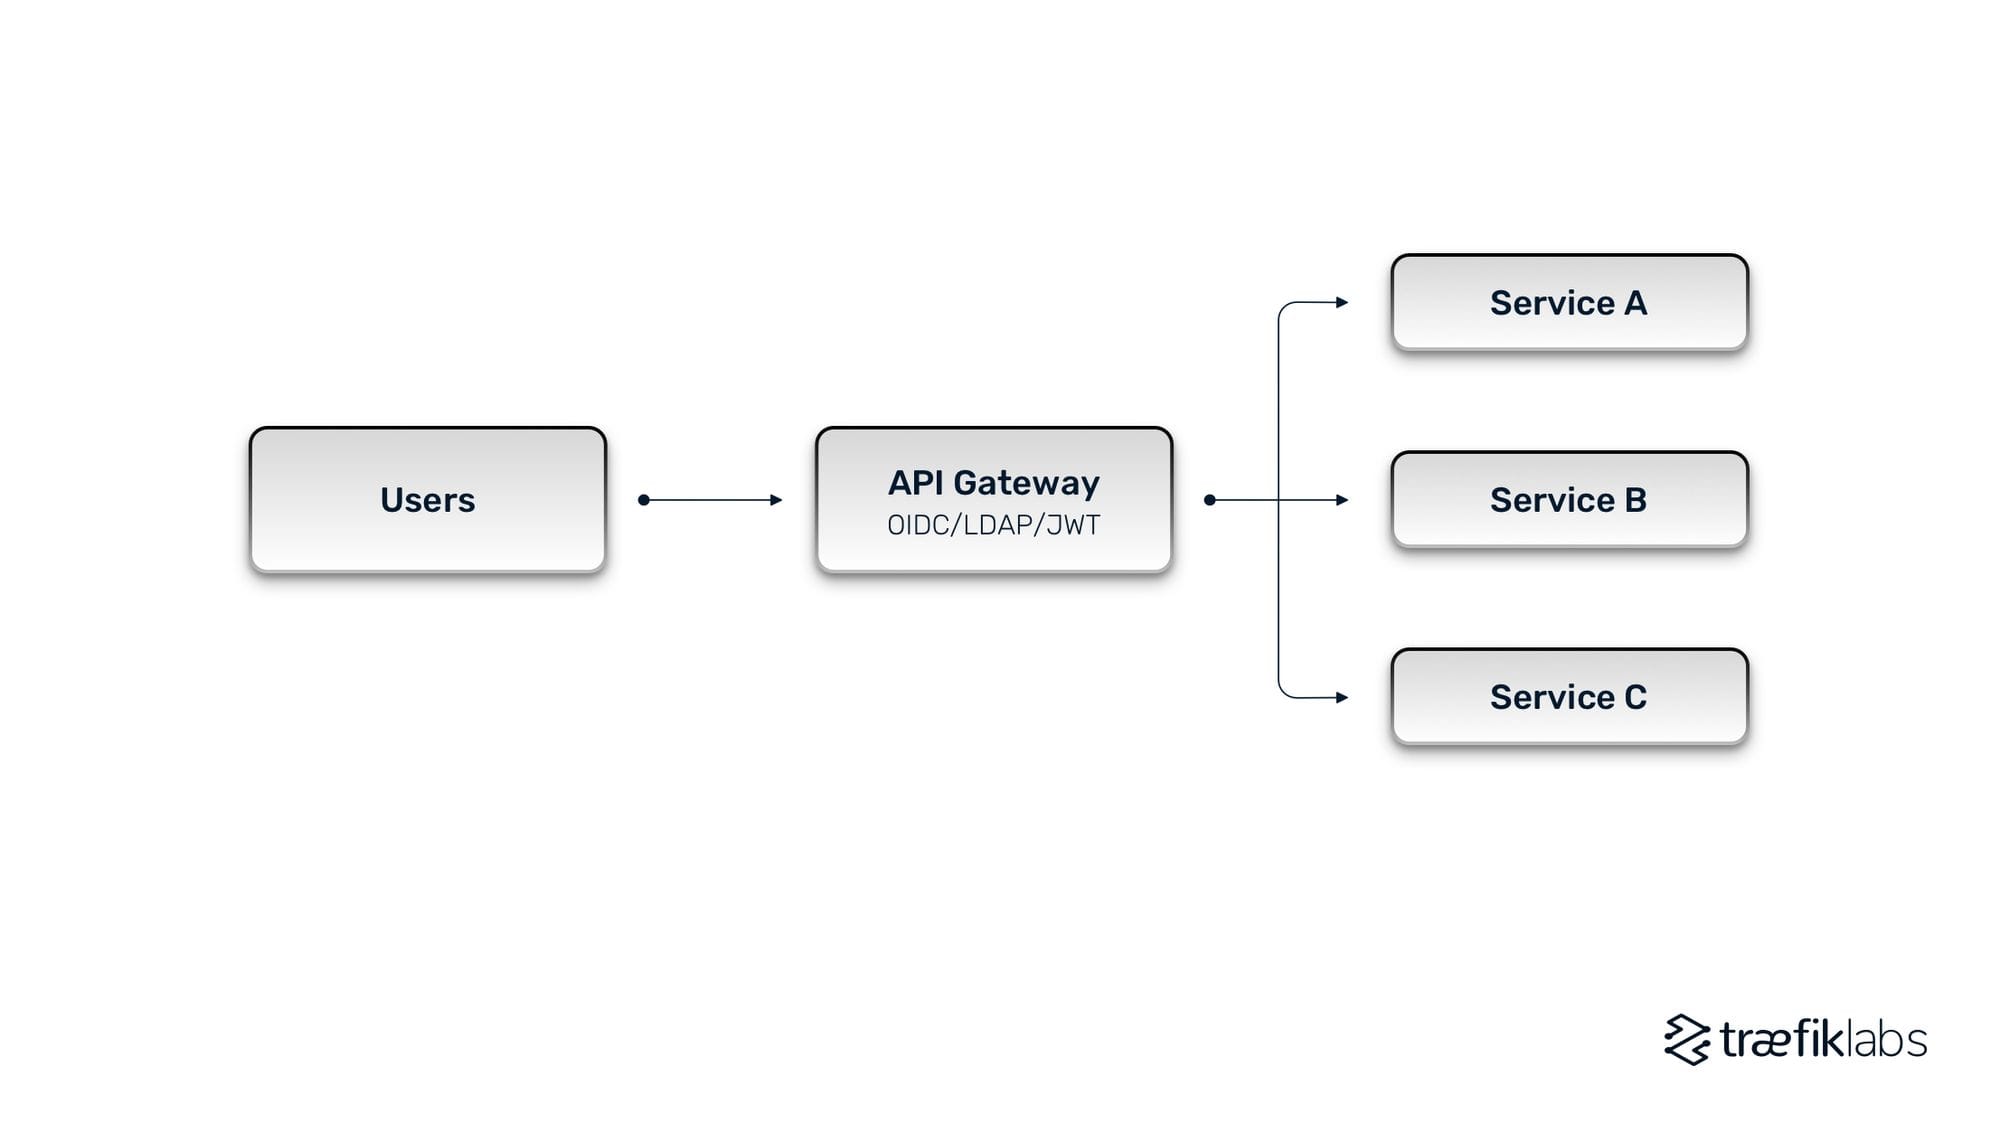 Managing access control via API Gateway model